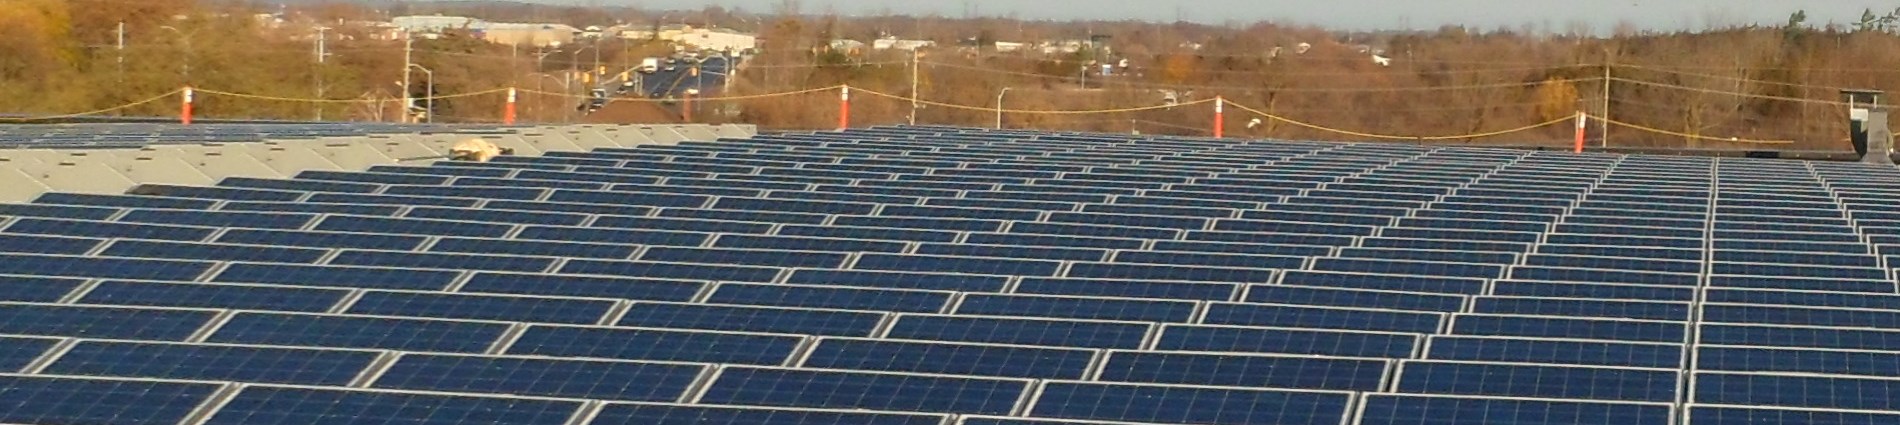 QSWC Rooftop Solar Array 